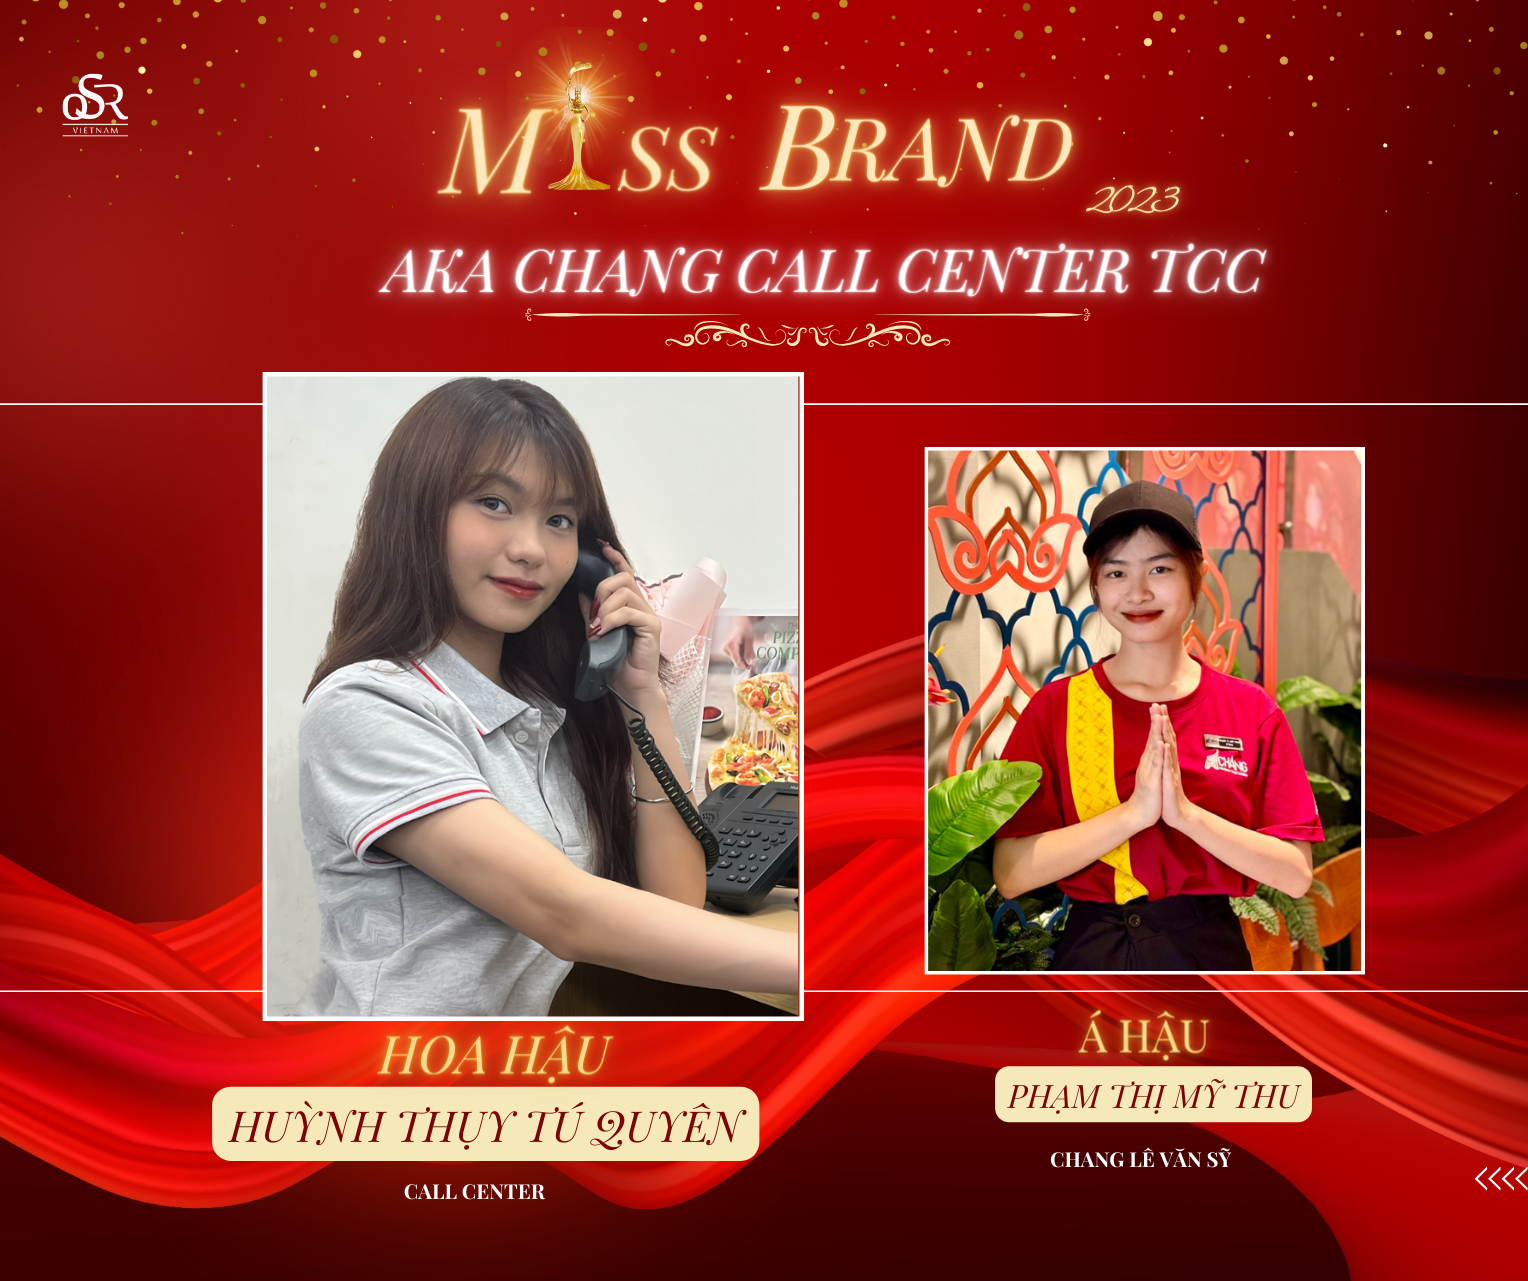 Miss Brand Call Center, Chang, Aka